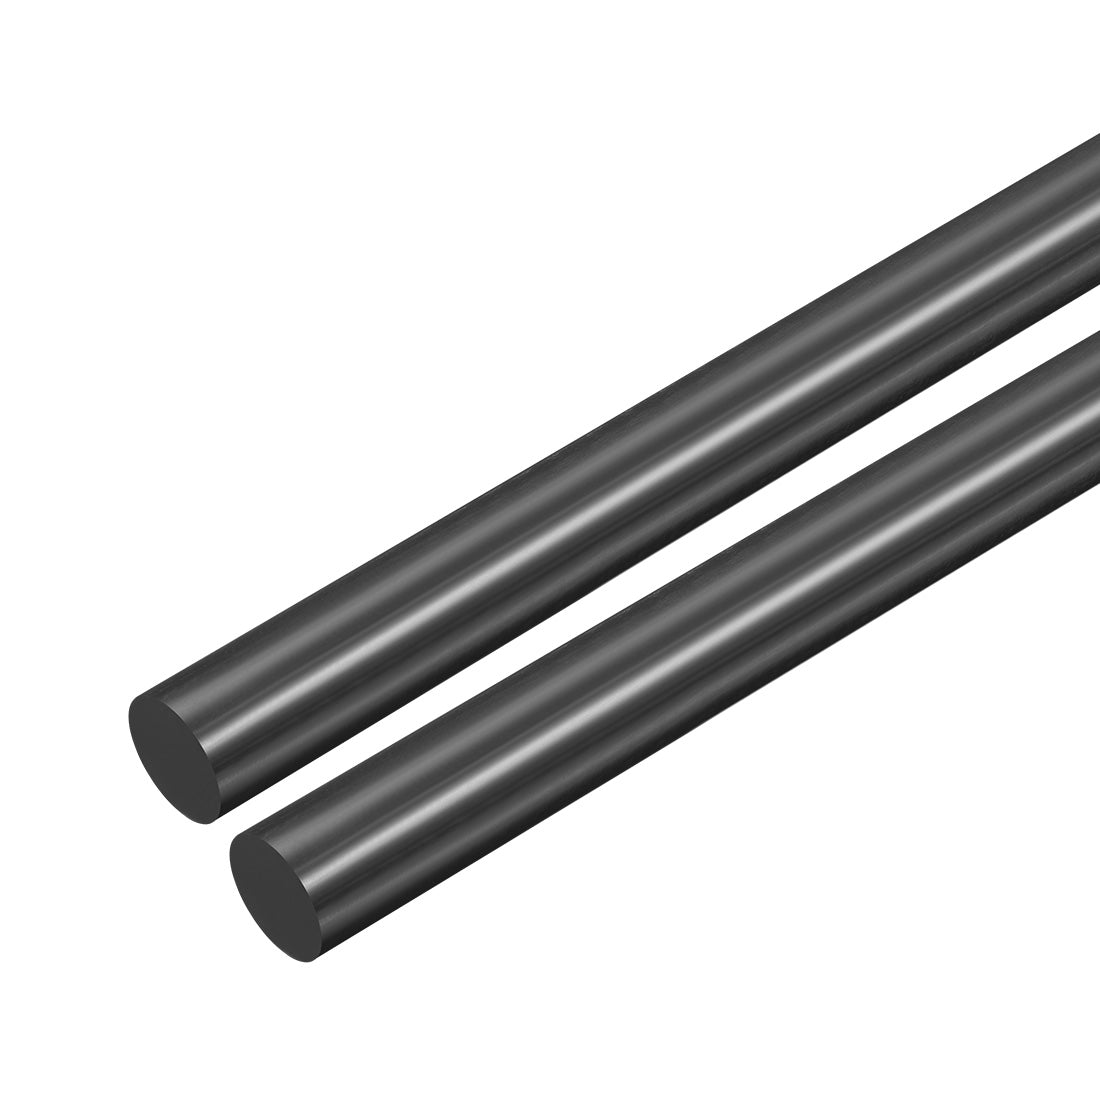 uxcell Uxcell Plastic Round Rod,12mm Dia 50cm Black Engineering Plastic Round Bar 2pcs